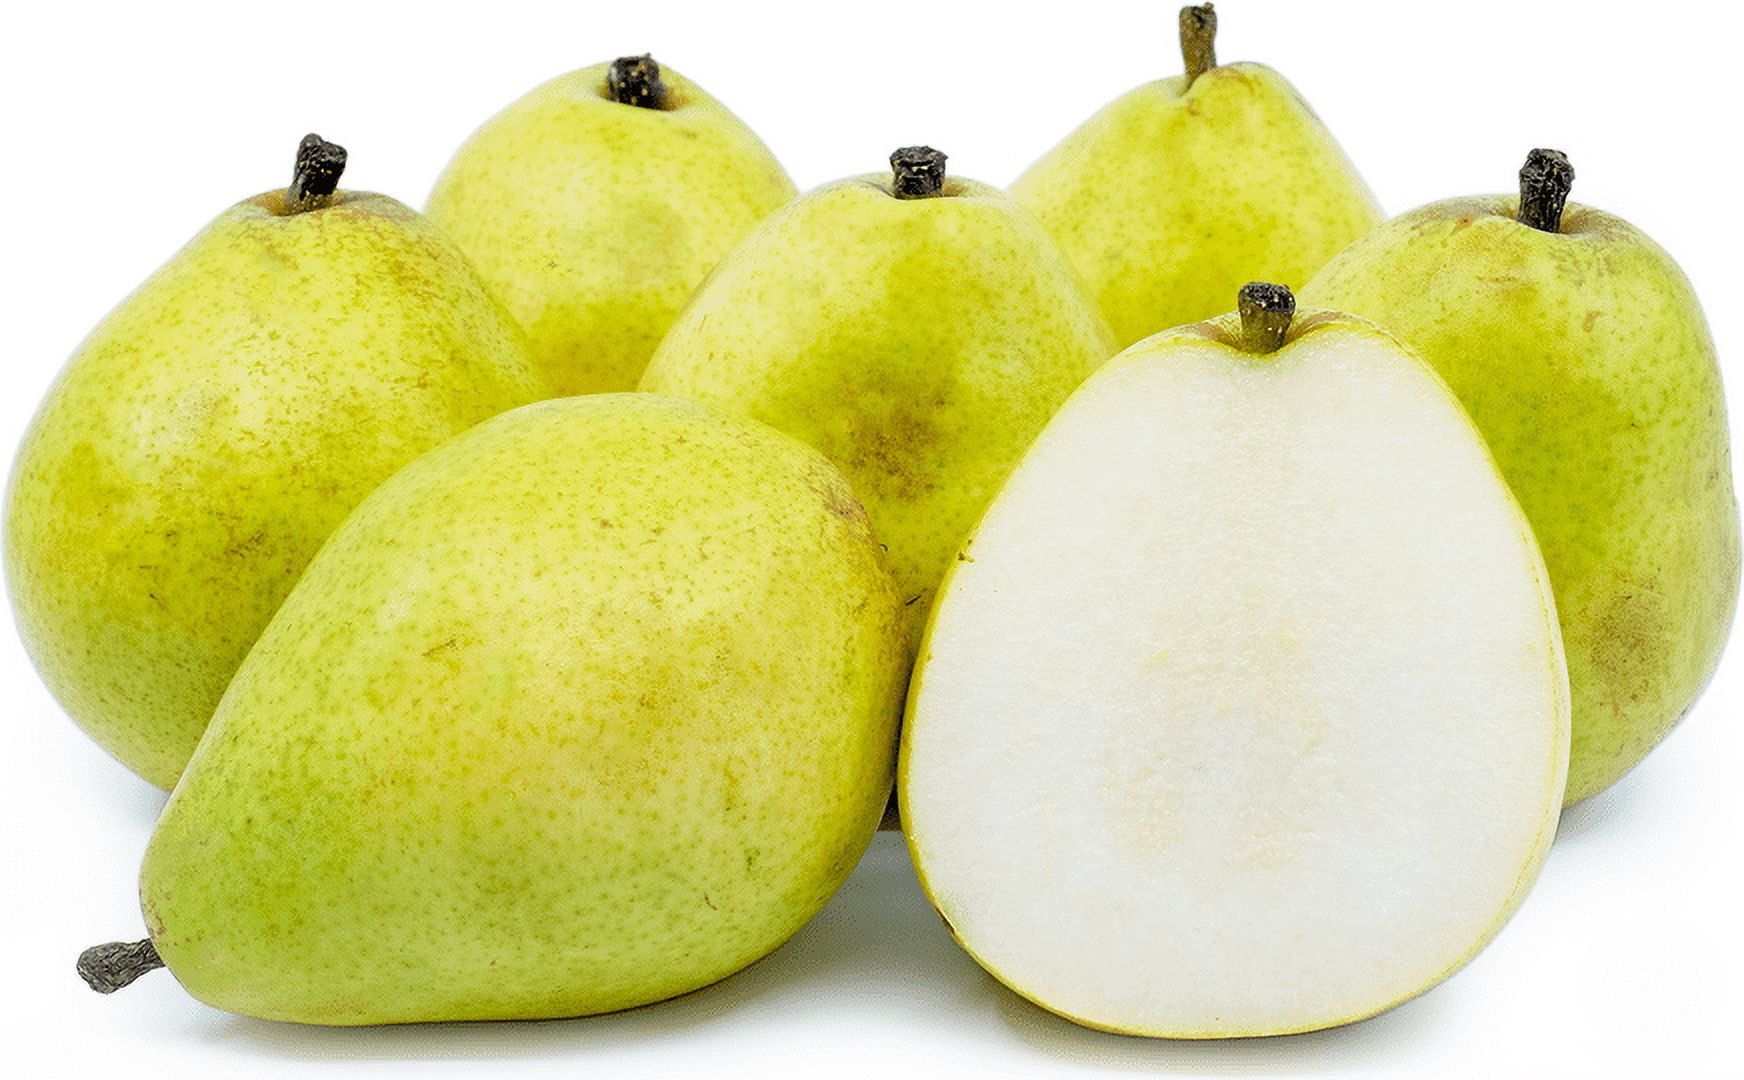 Organic Bartlett Pears, 1 ct - City Market